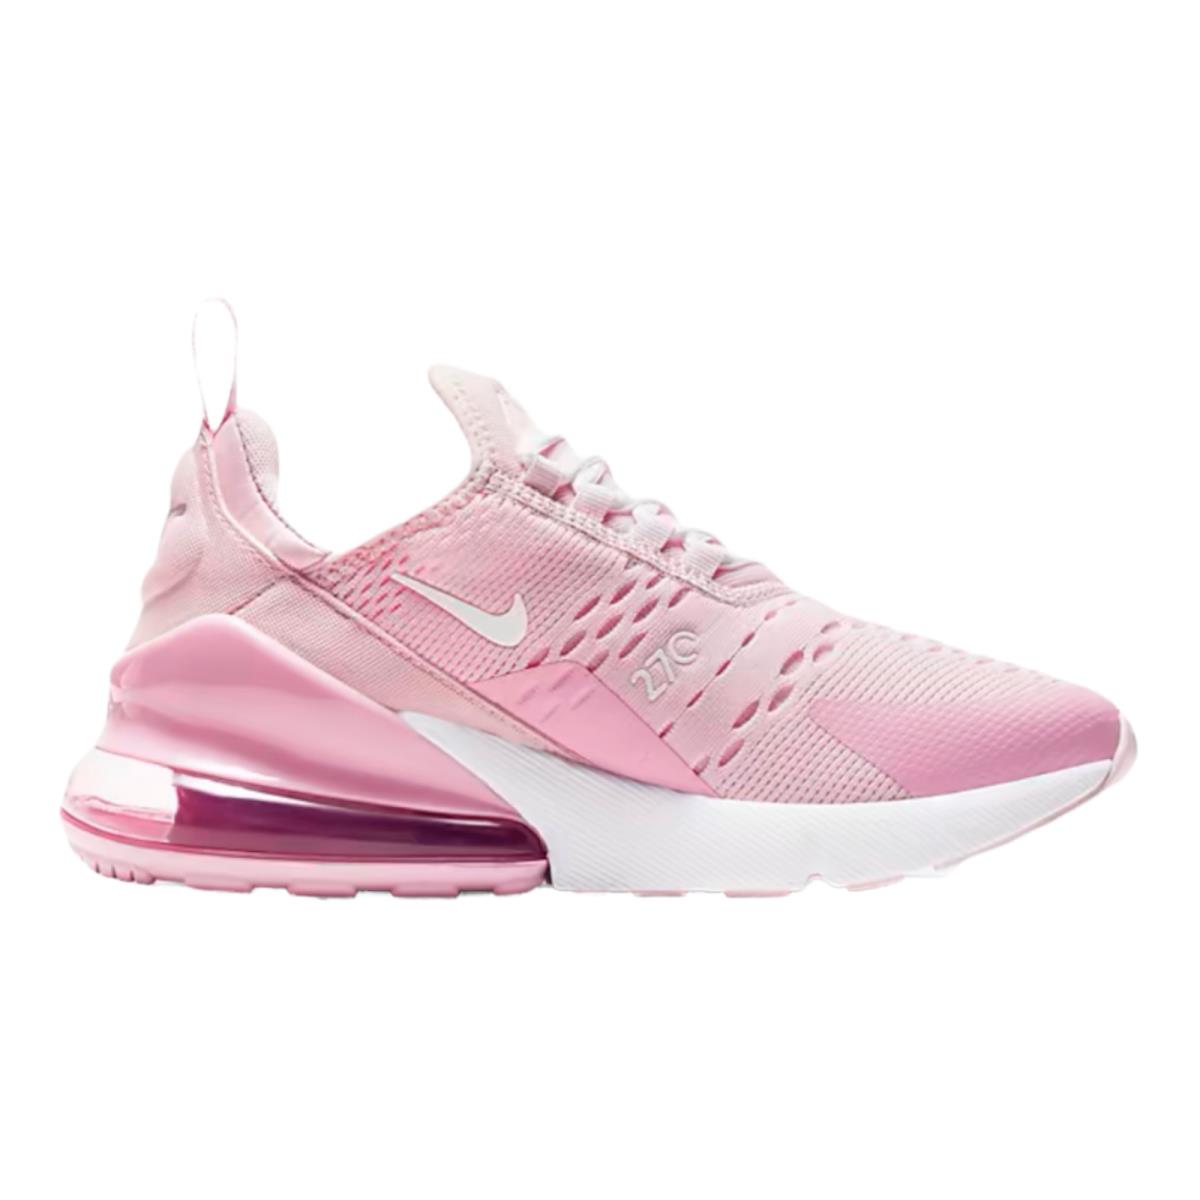 Nike Air Max 270 Women / Grade School Shoes Pink White CV9645-600 s 6Y/ 7.5W